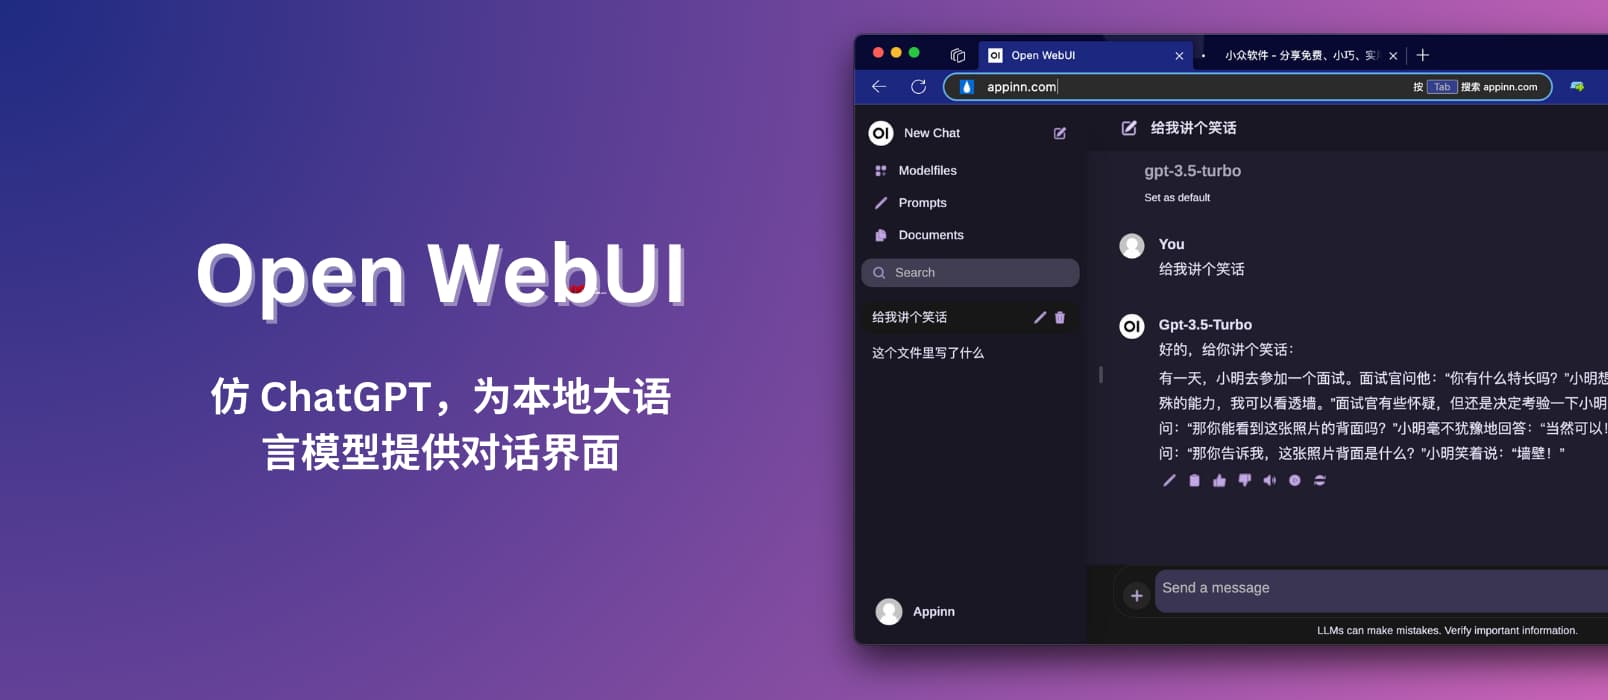 Open WebUI – 仿照 ChatGPT，为本地大语言模型提供对话界面